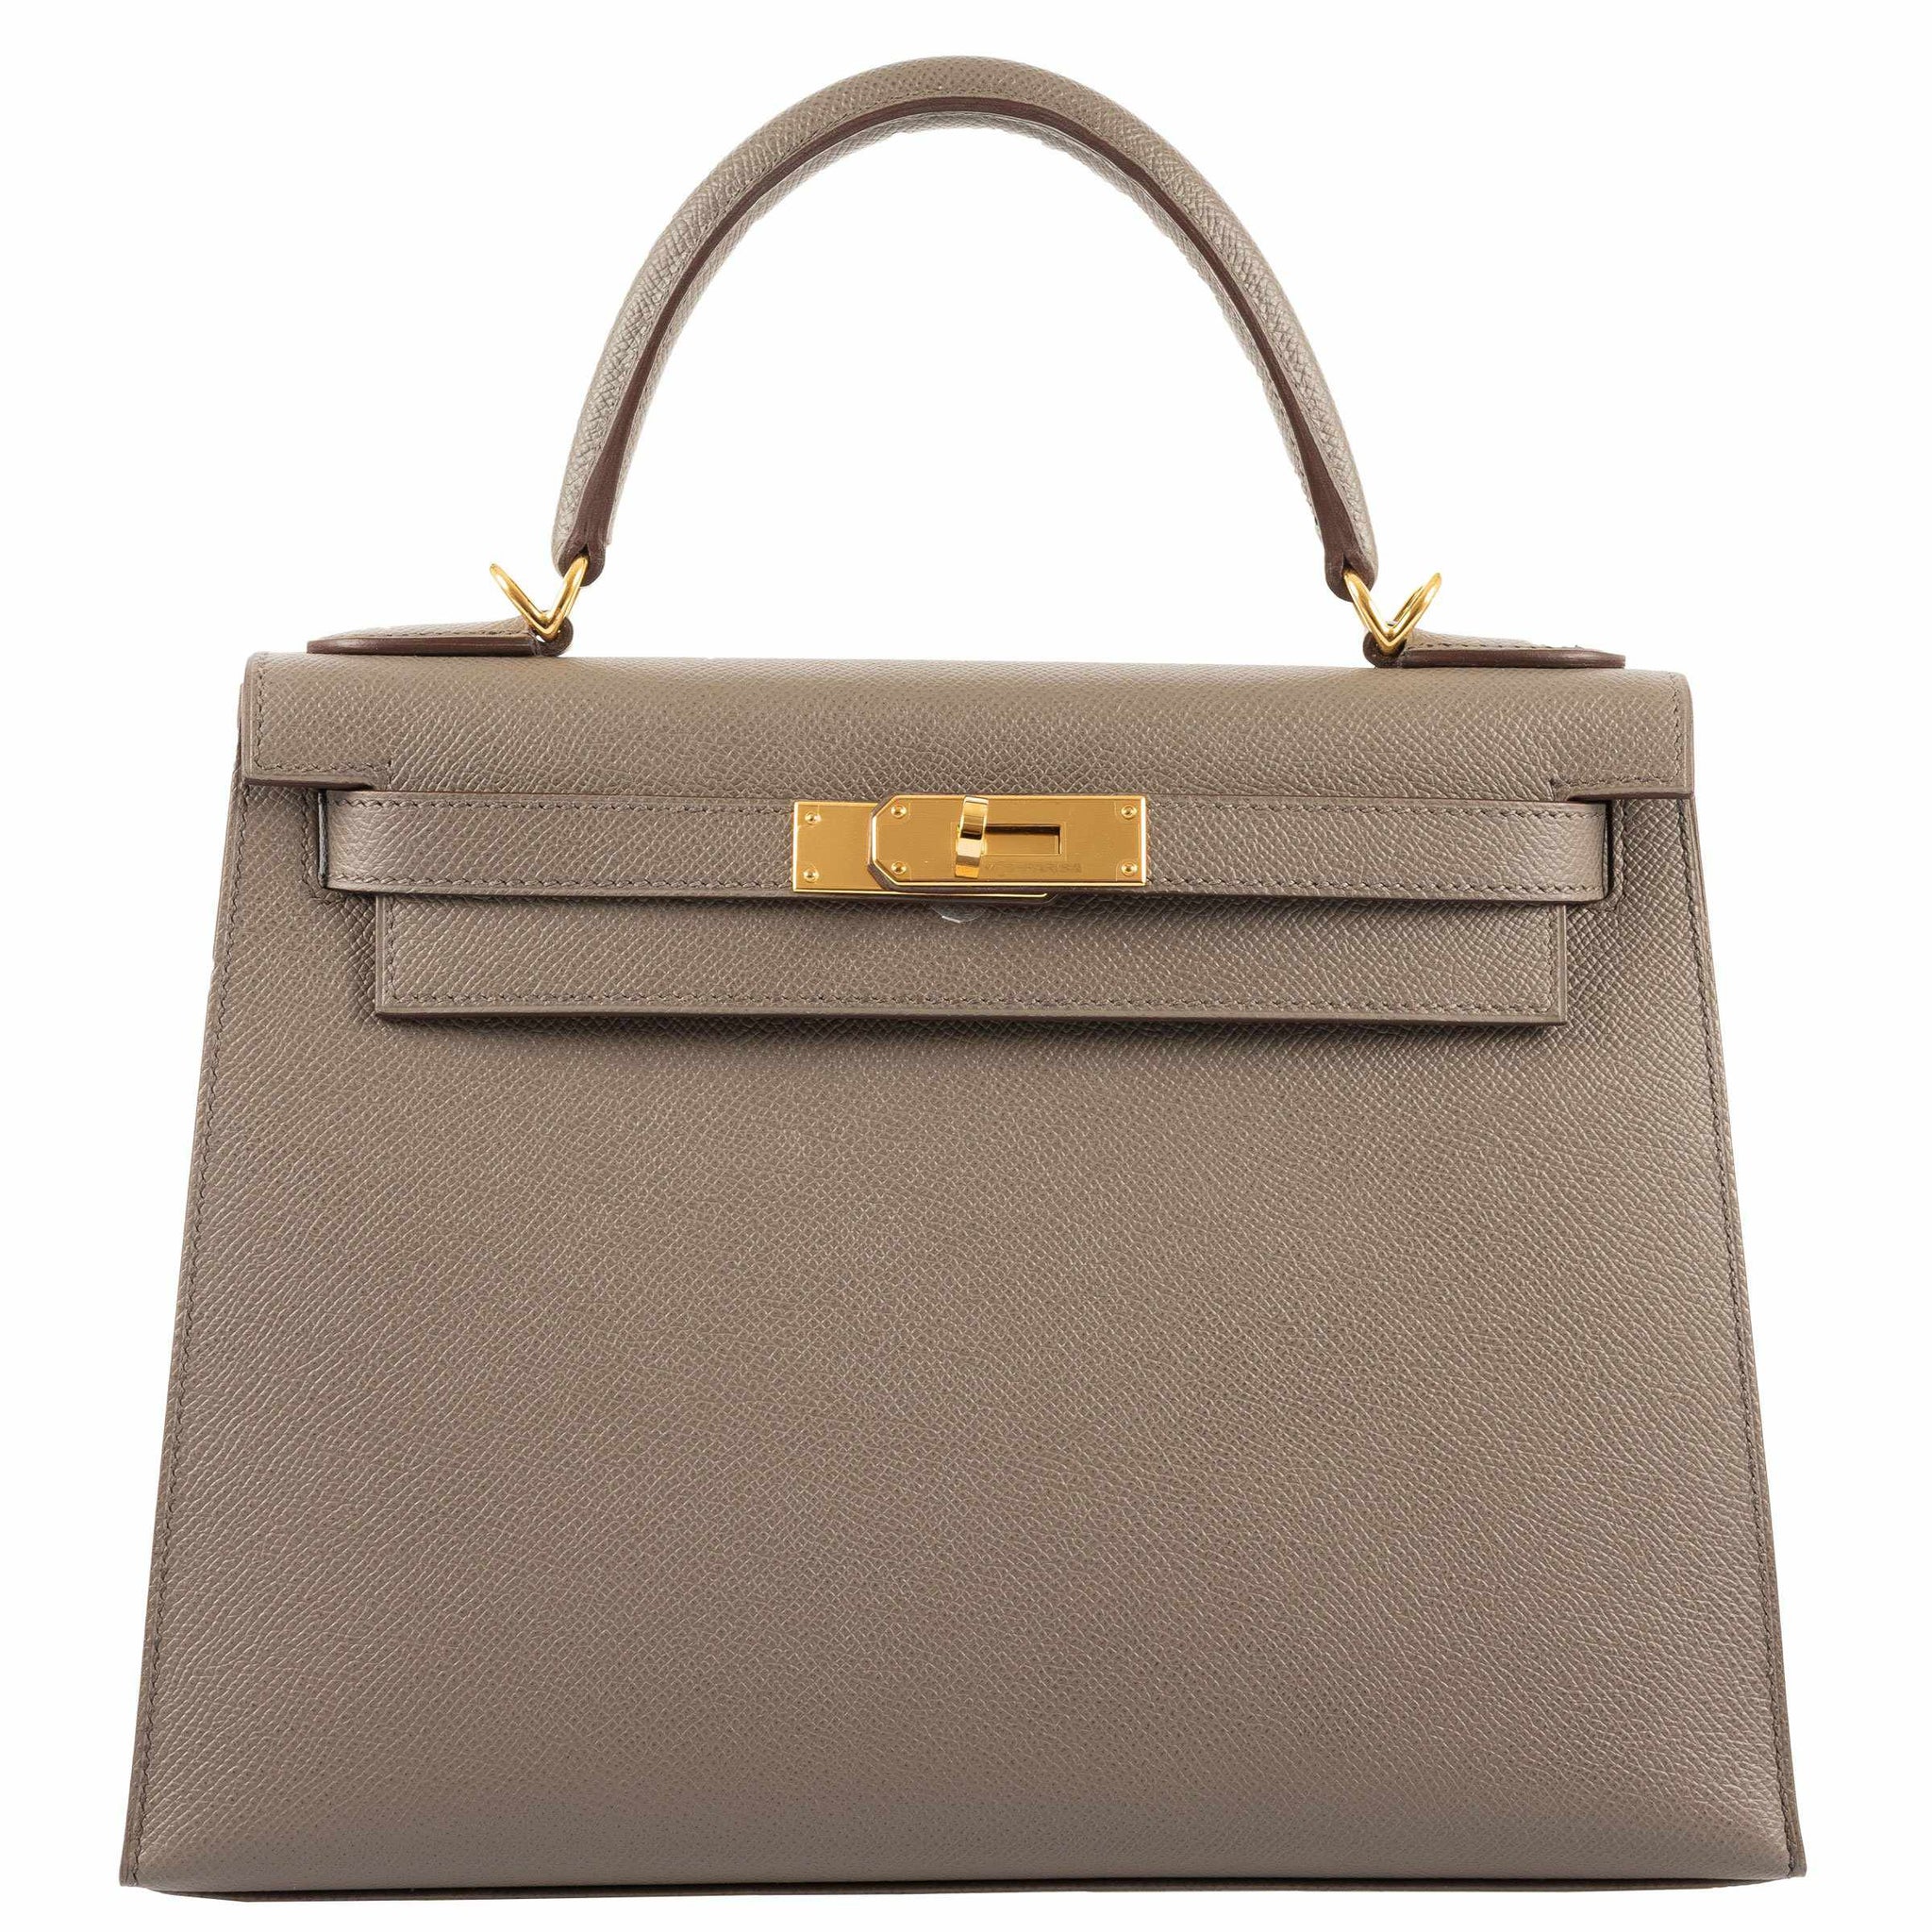 Hermes Birkin Bag, Etain, 35cm, Epsom with Gold - Bags of Luxury